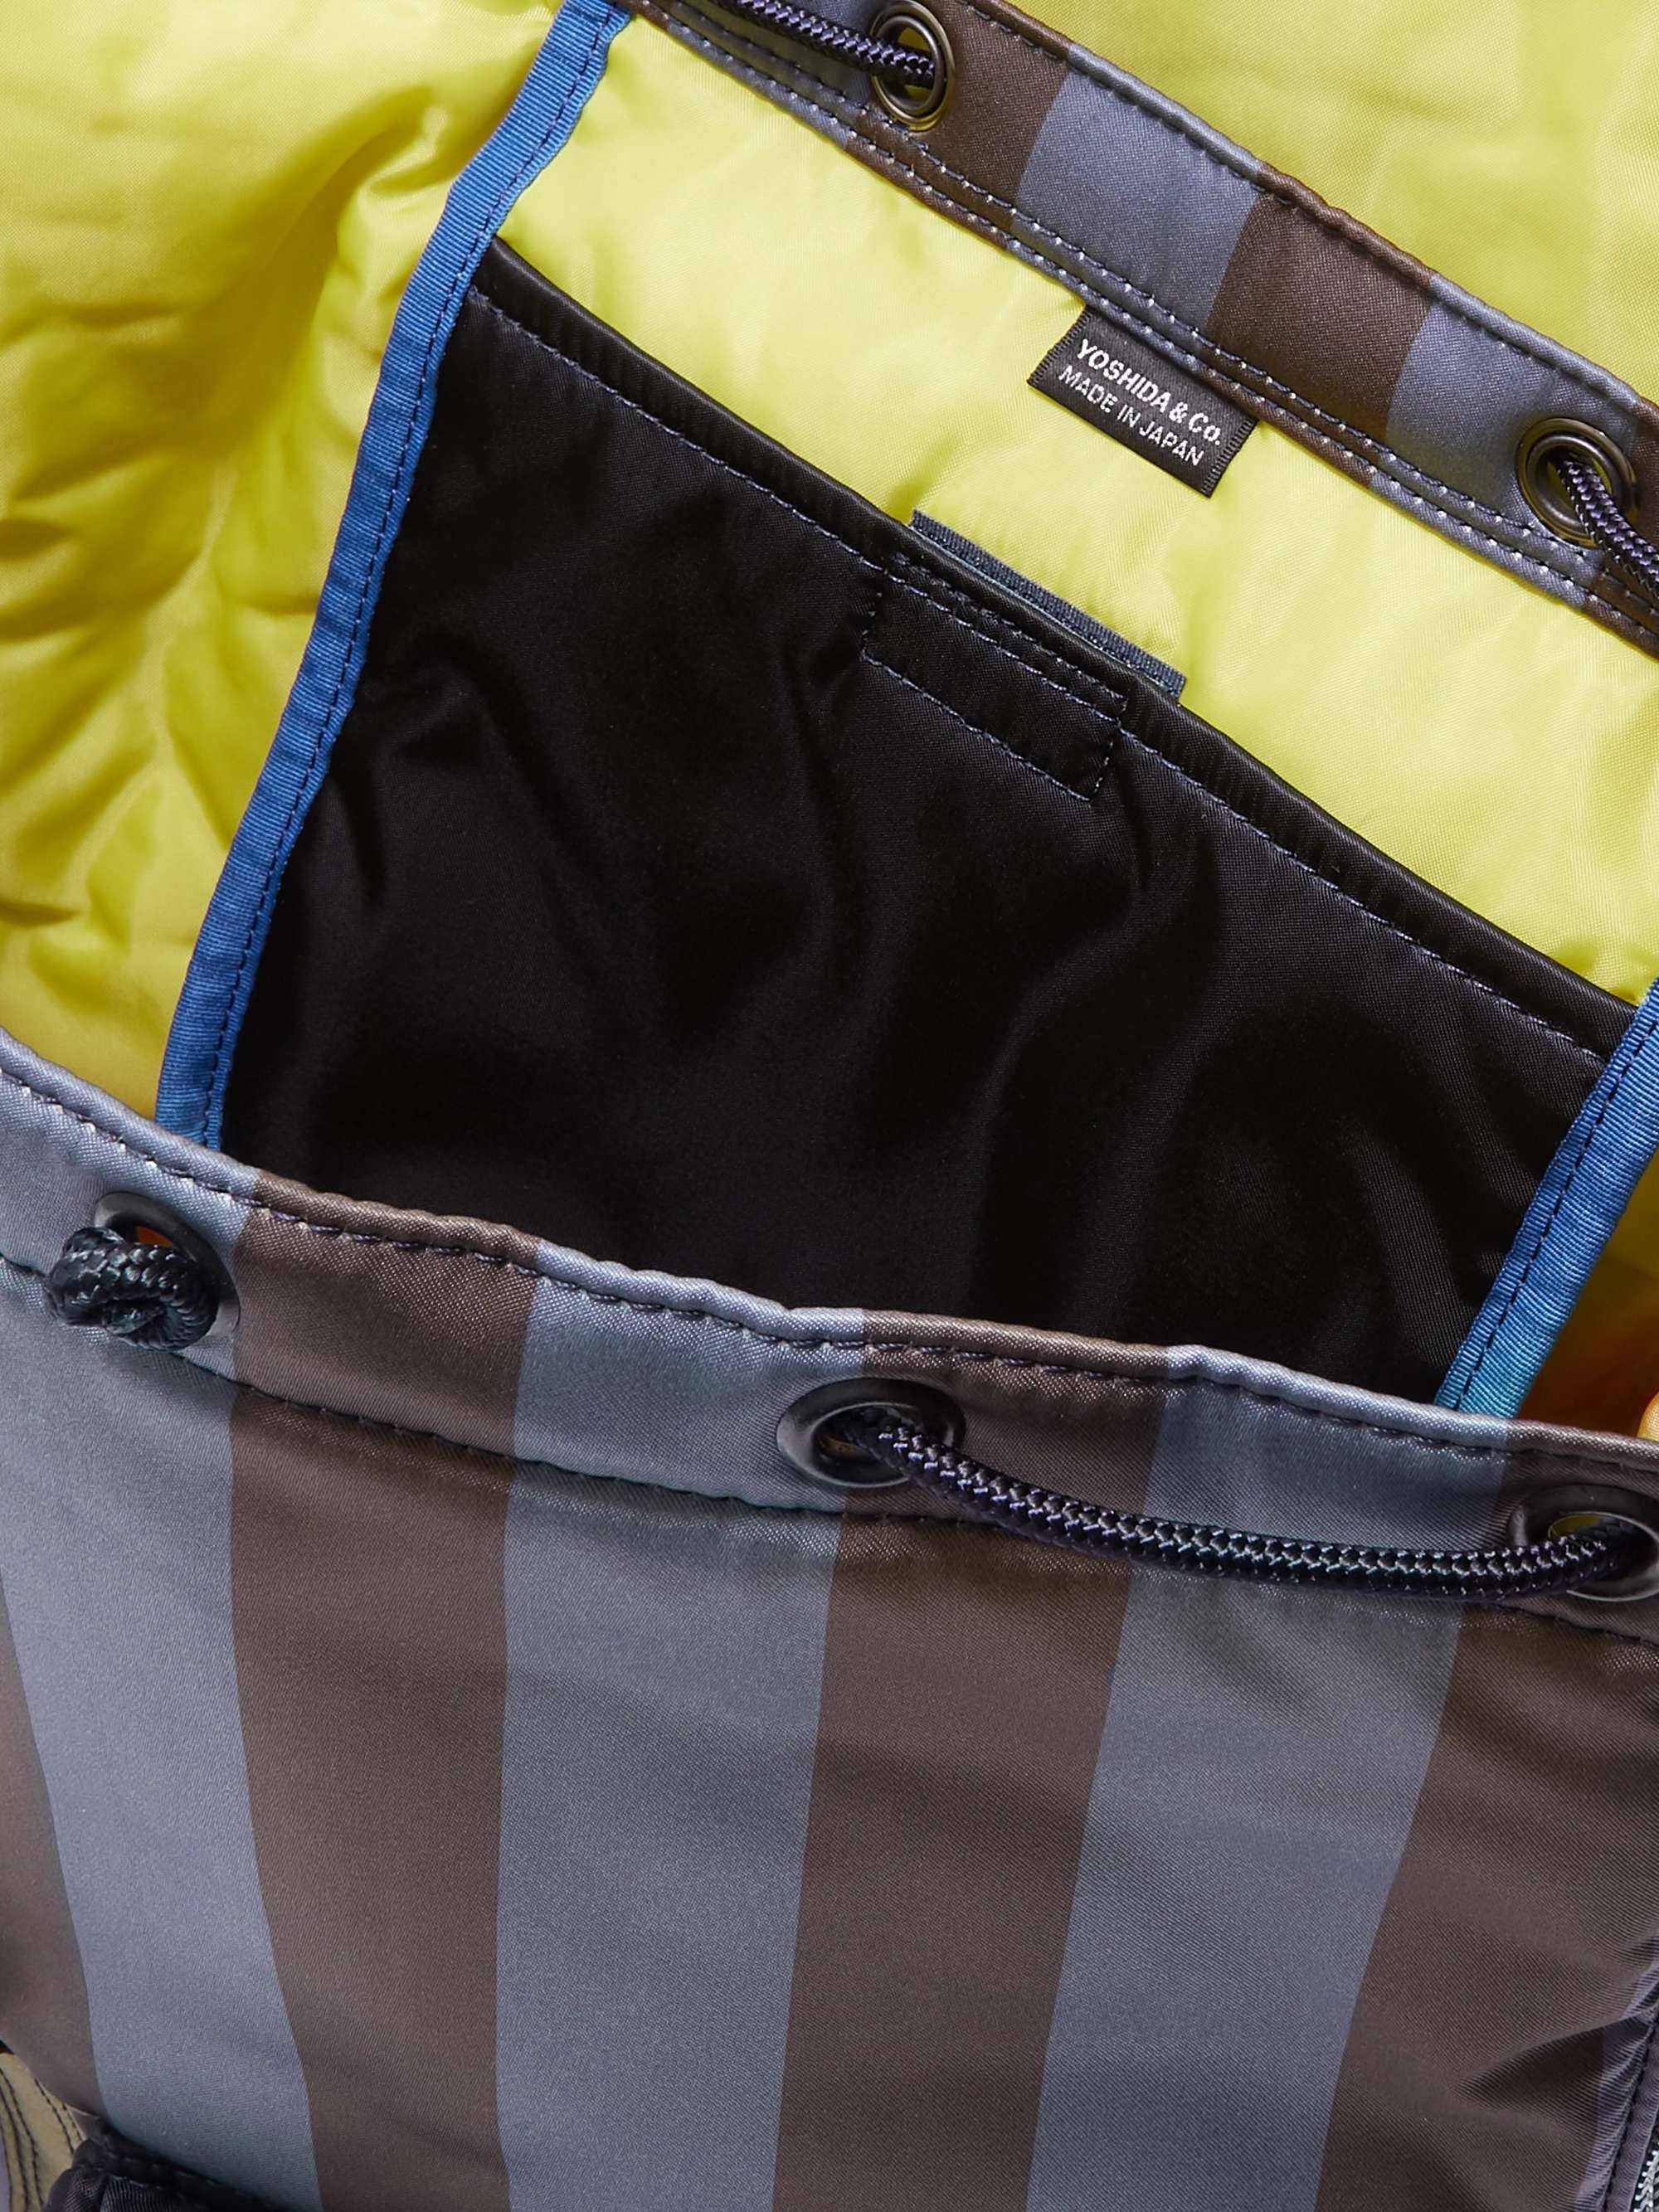 + Porter-Yoshida & Co Striped Nylon Backpack